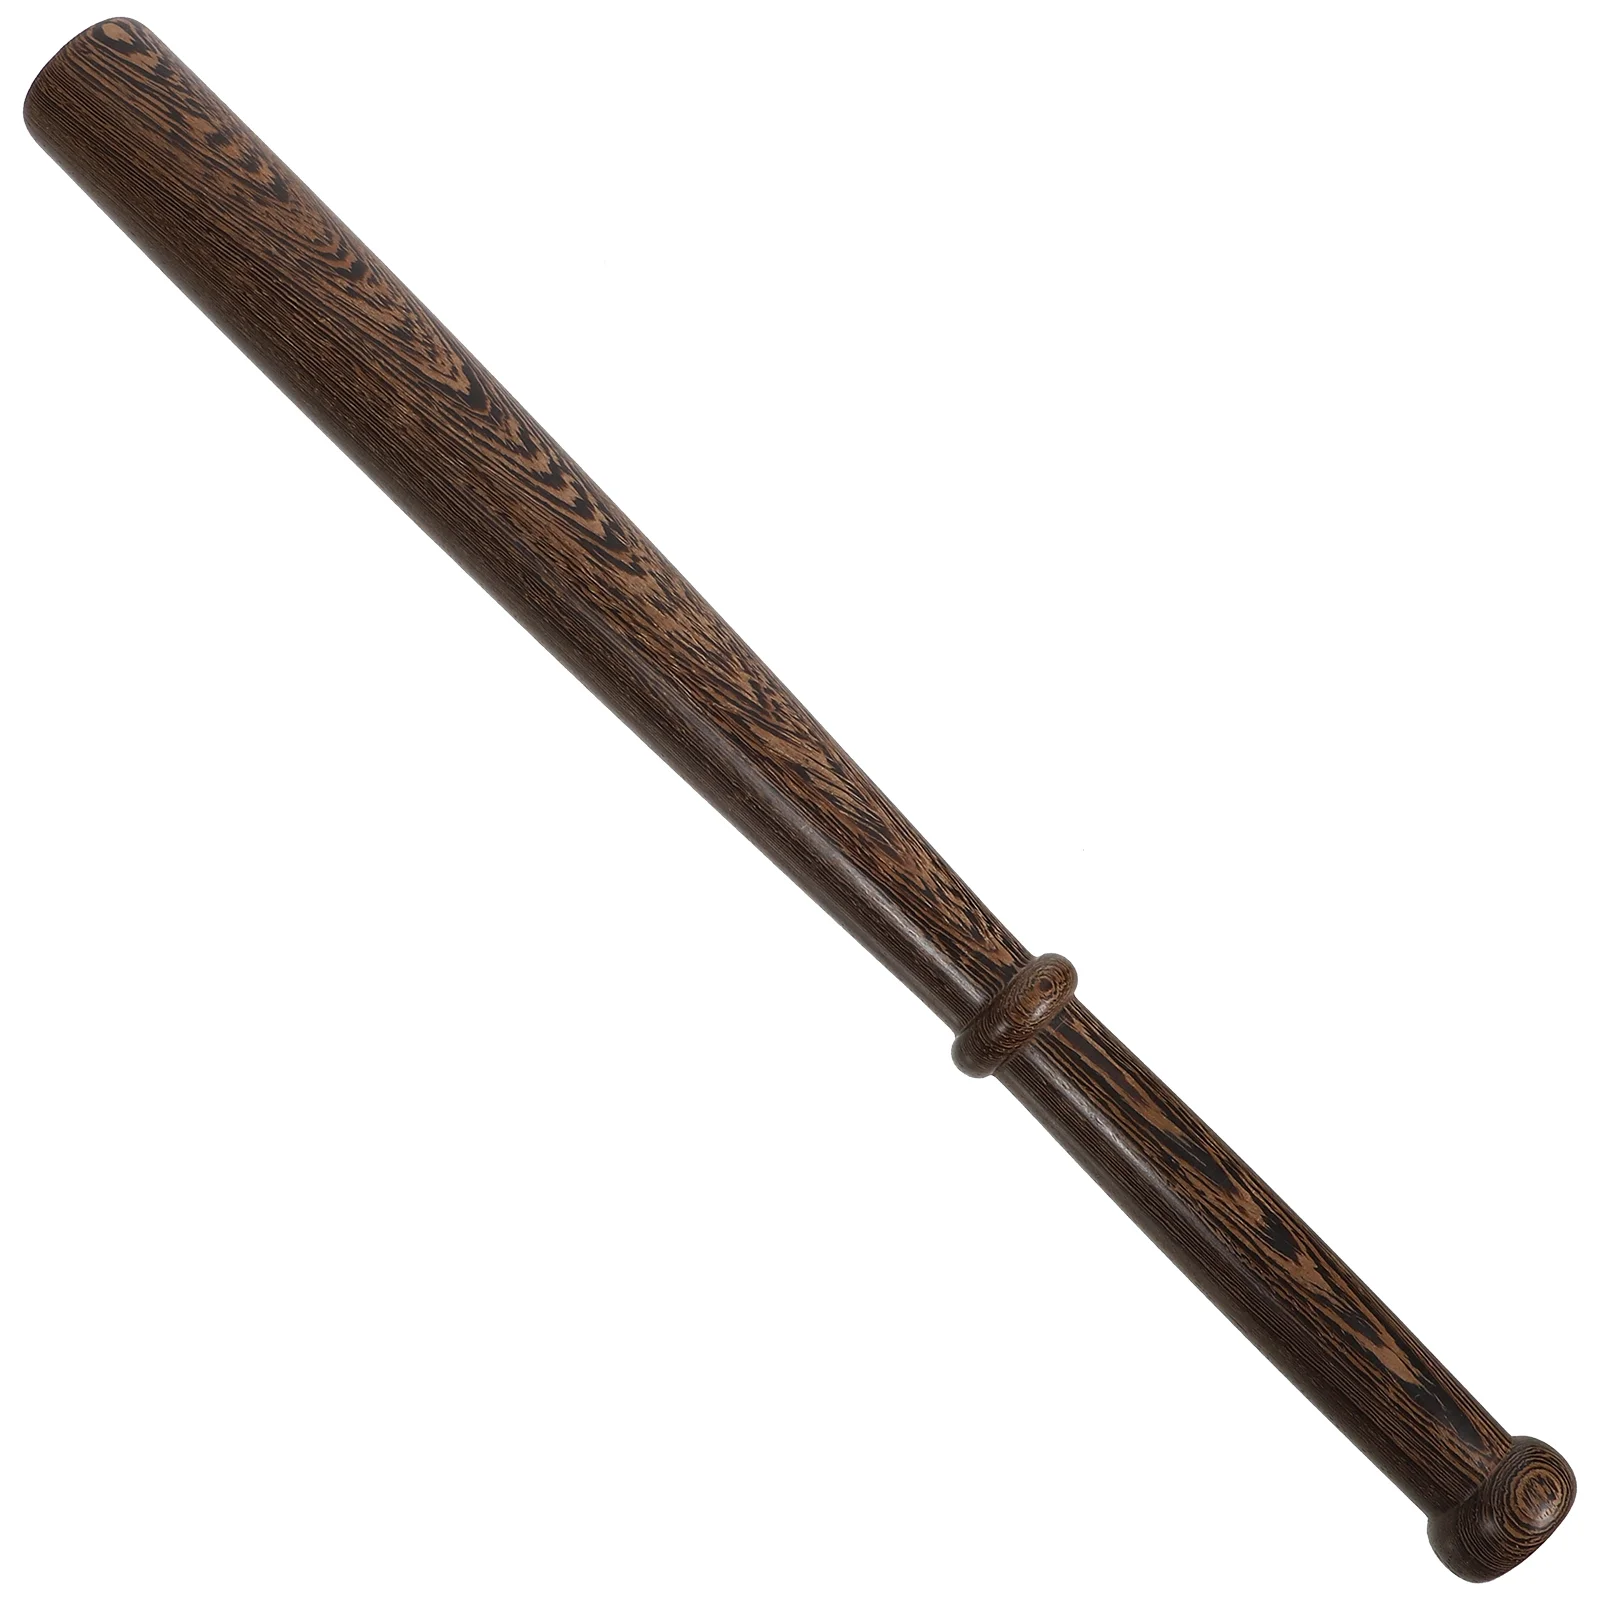 

Wooden Baseball Bat Bats Vintage Exercising Lightweight for Baseballs Training Solid Practical